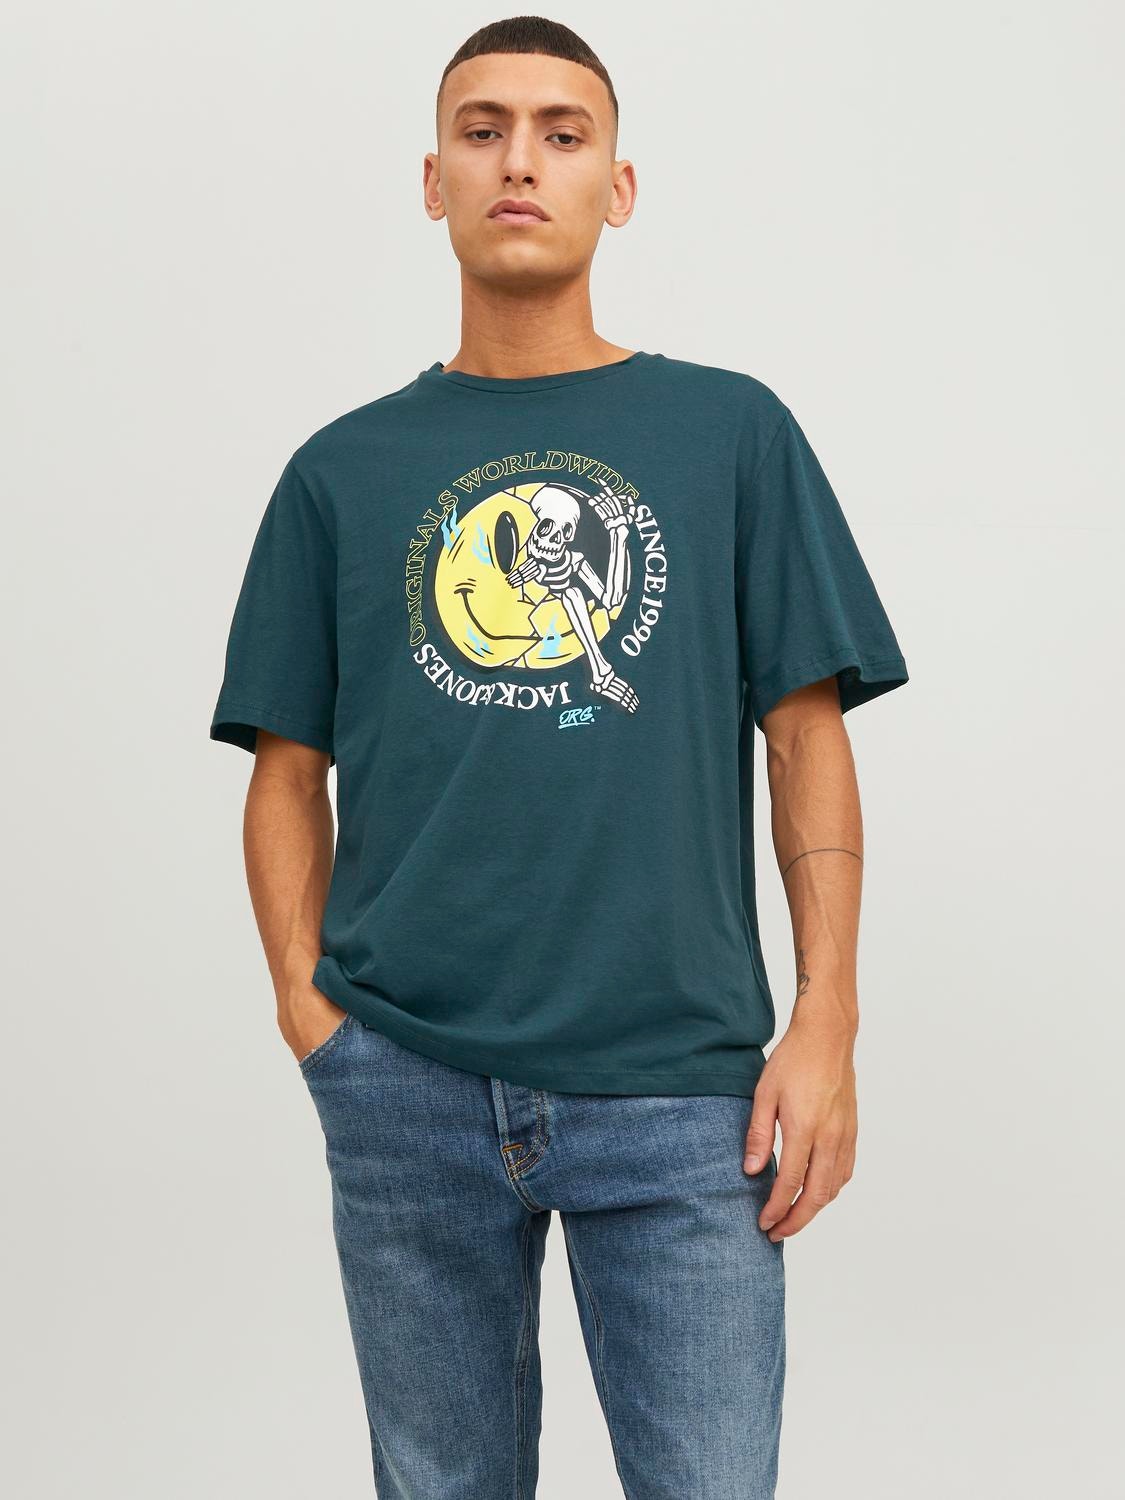 Jack & Jones Logo Rundhals T-shirt -Magical Forest - 12241950